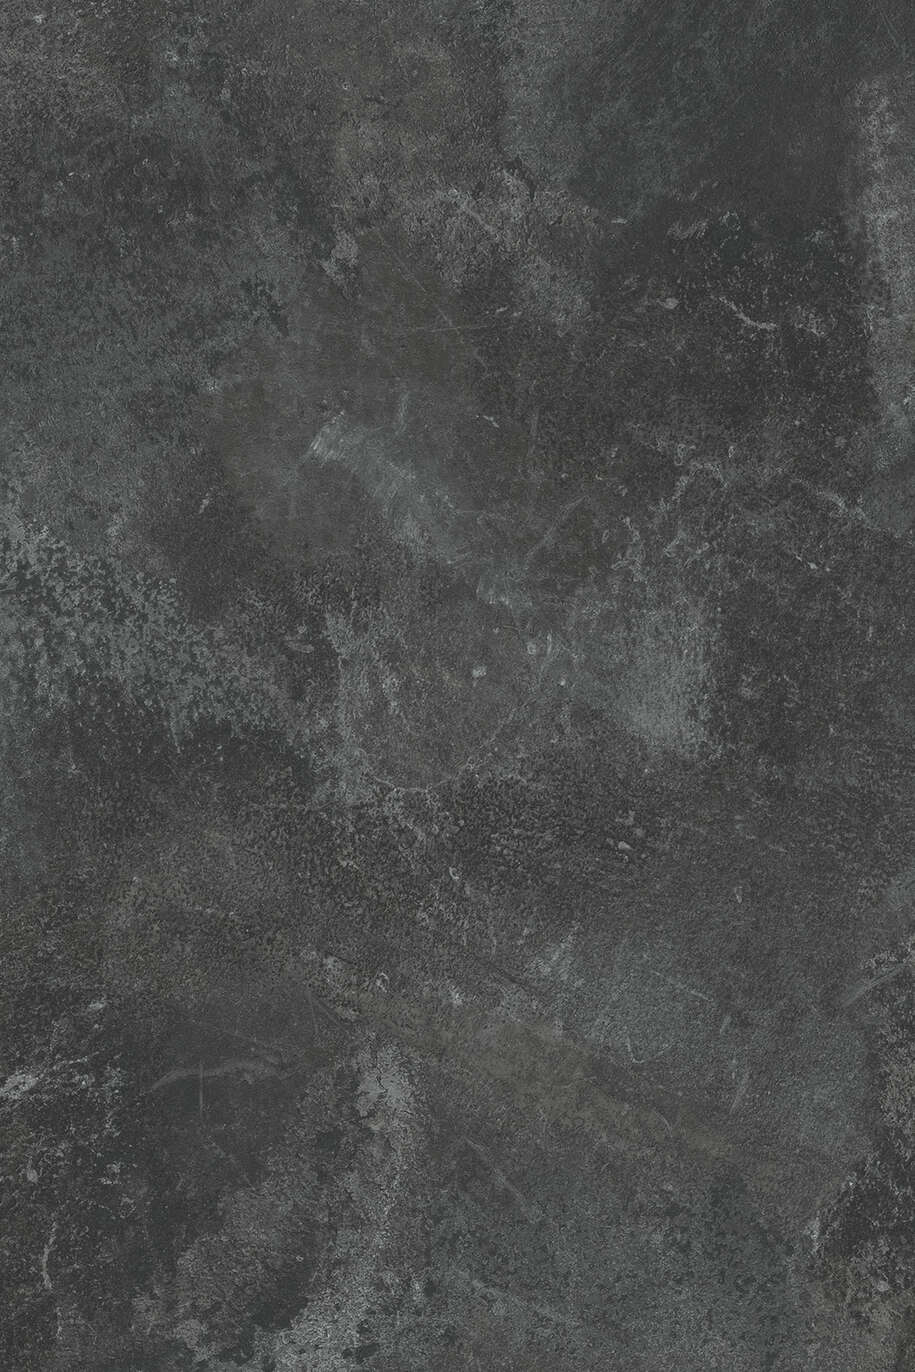 SD KR K205 RS Dark Black Concrete 38 x 900 x 4100 mm 